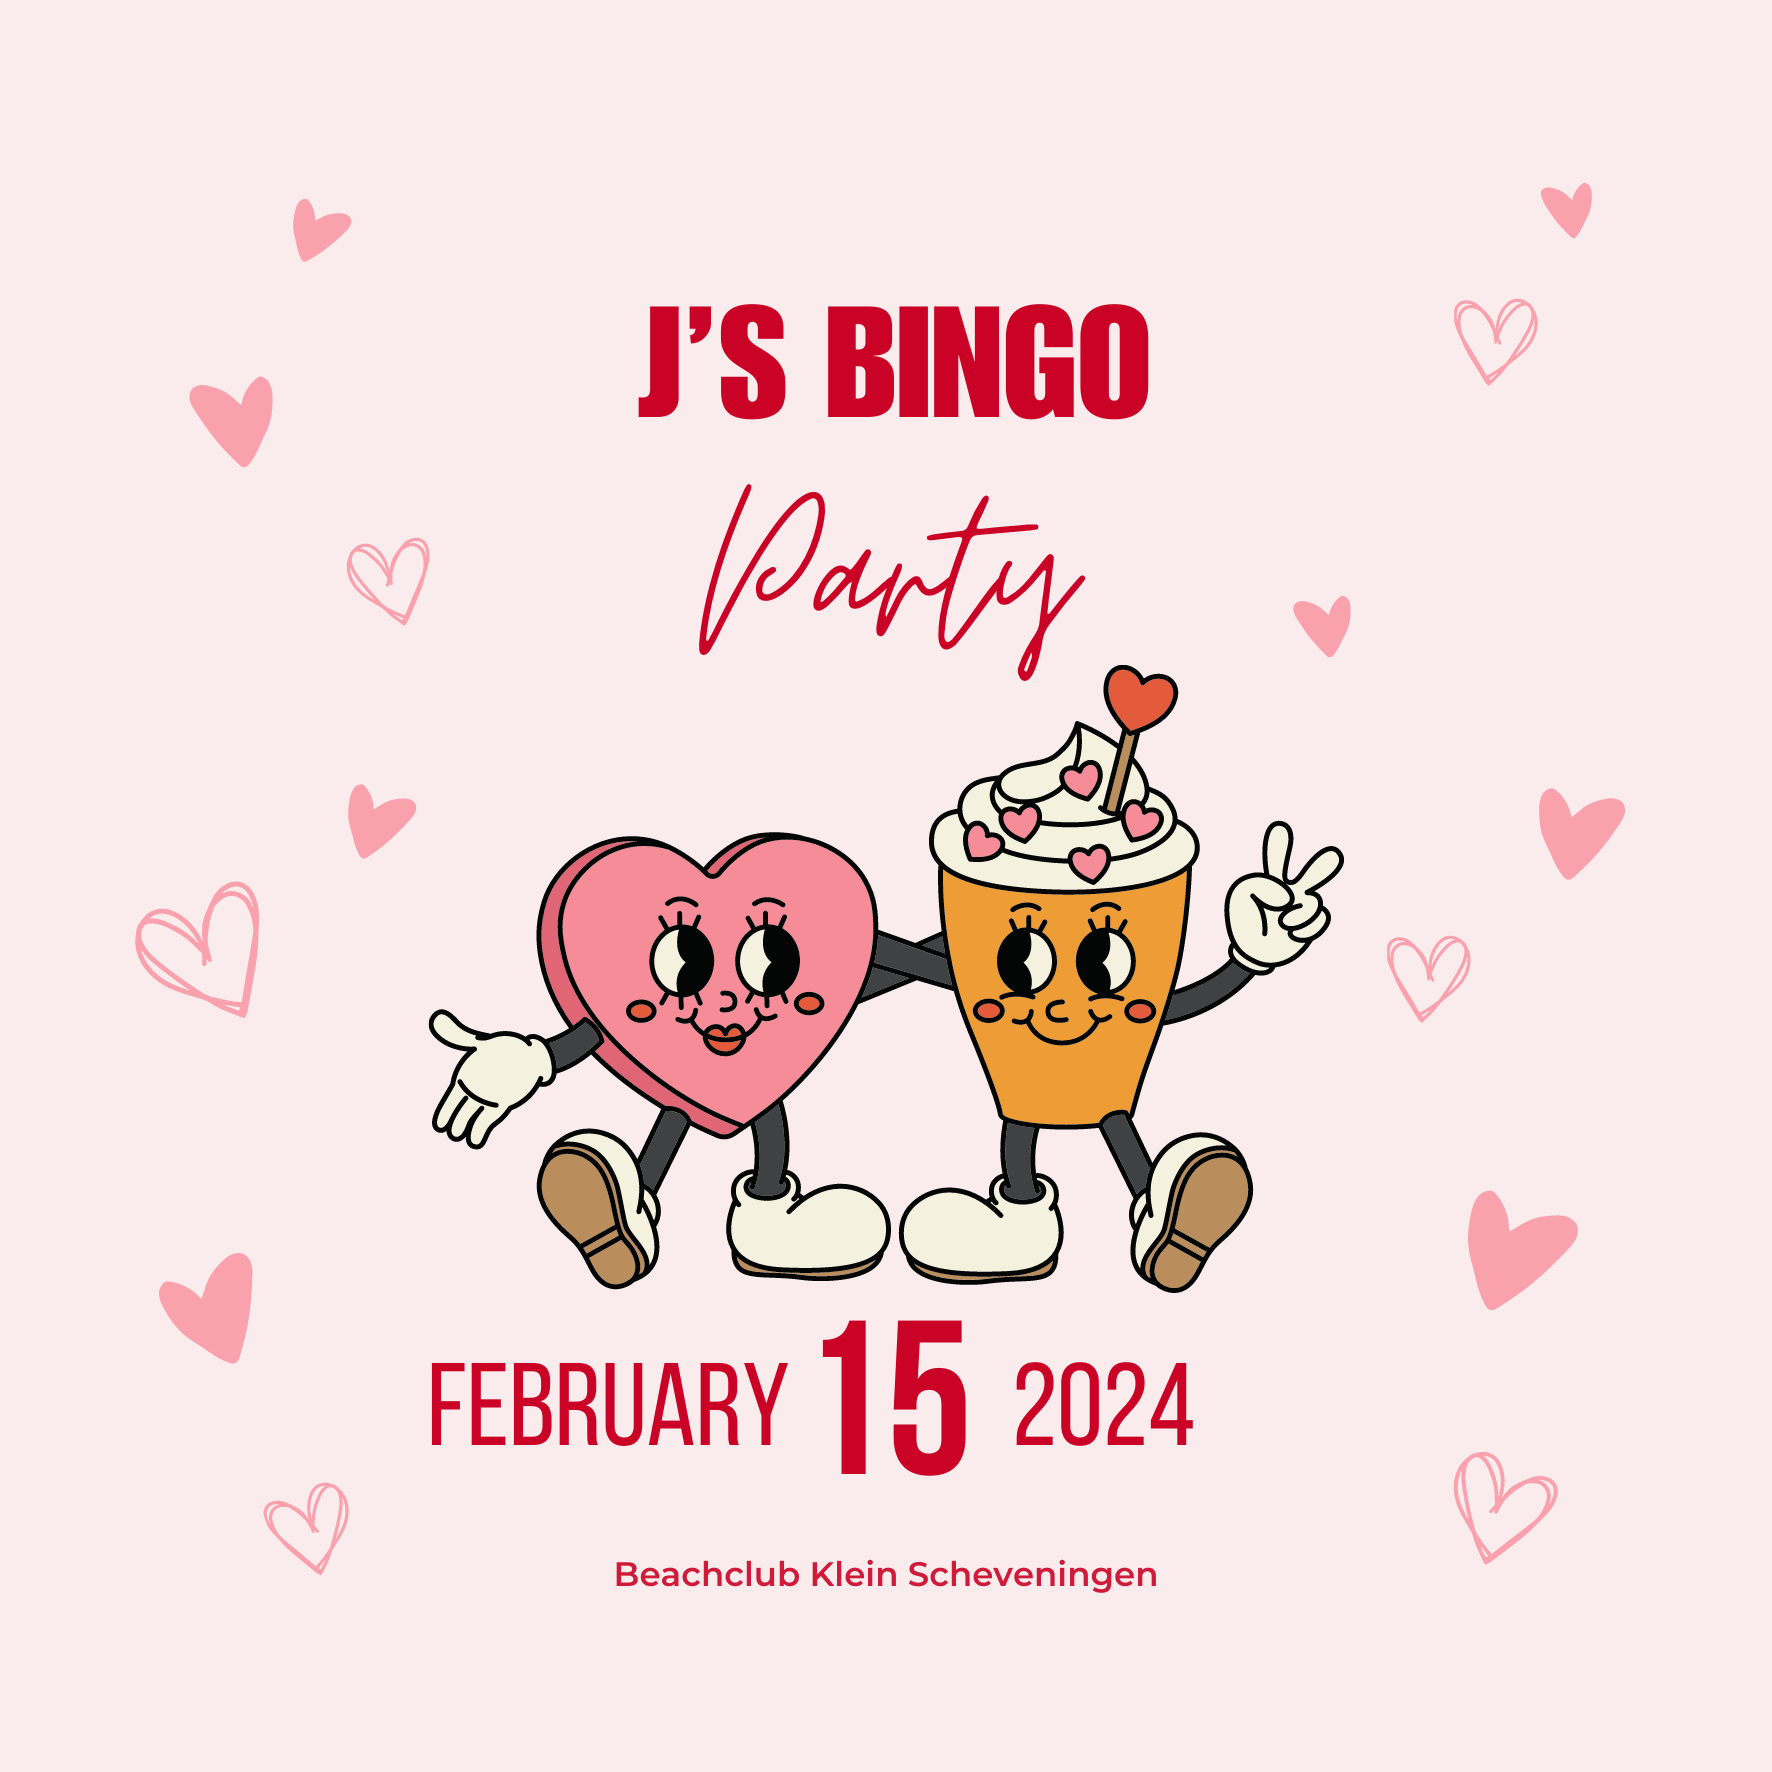 JS Bingo party feb 24 